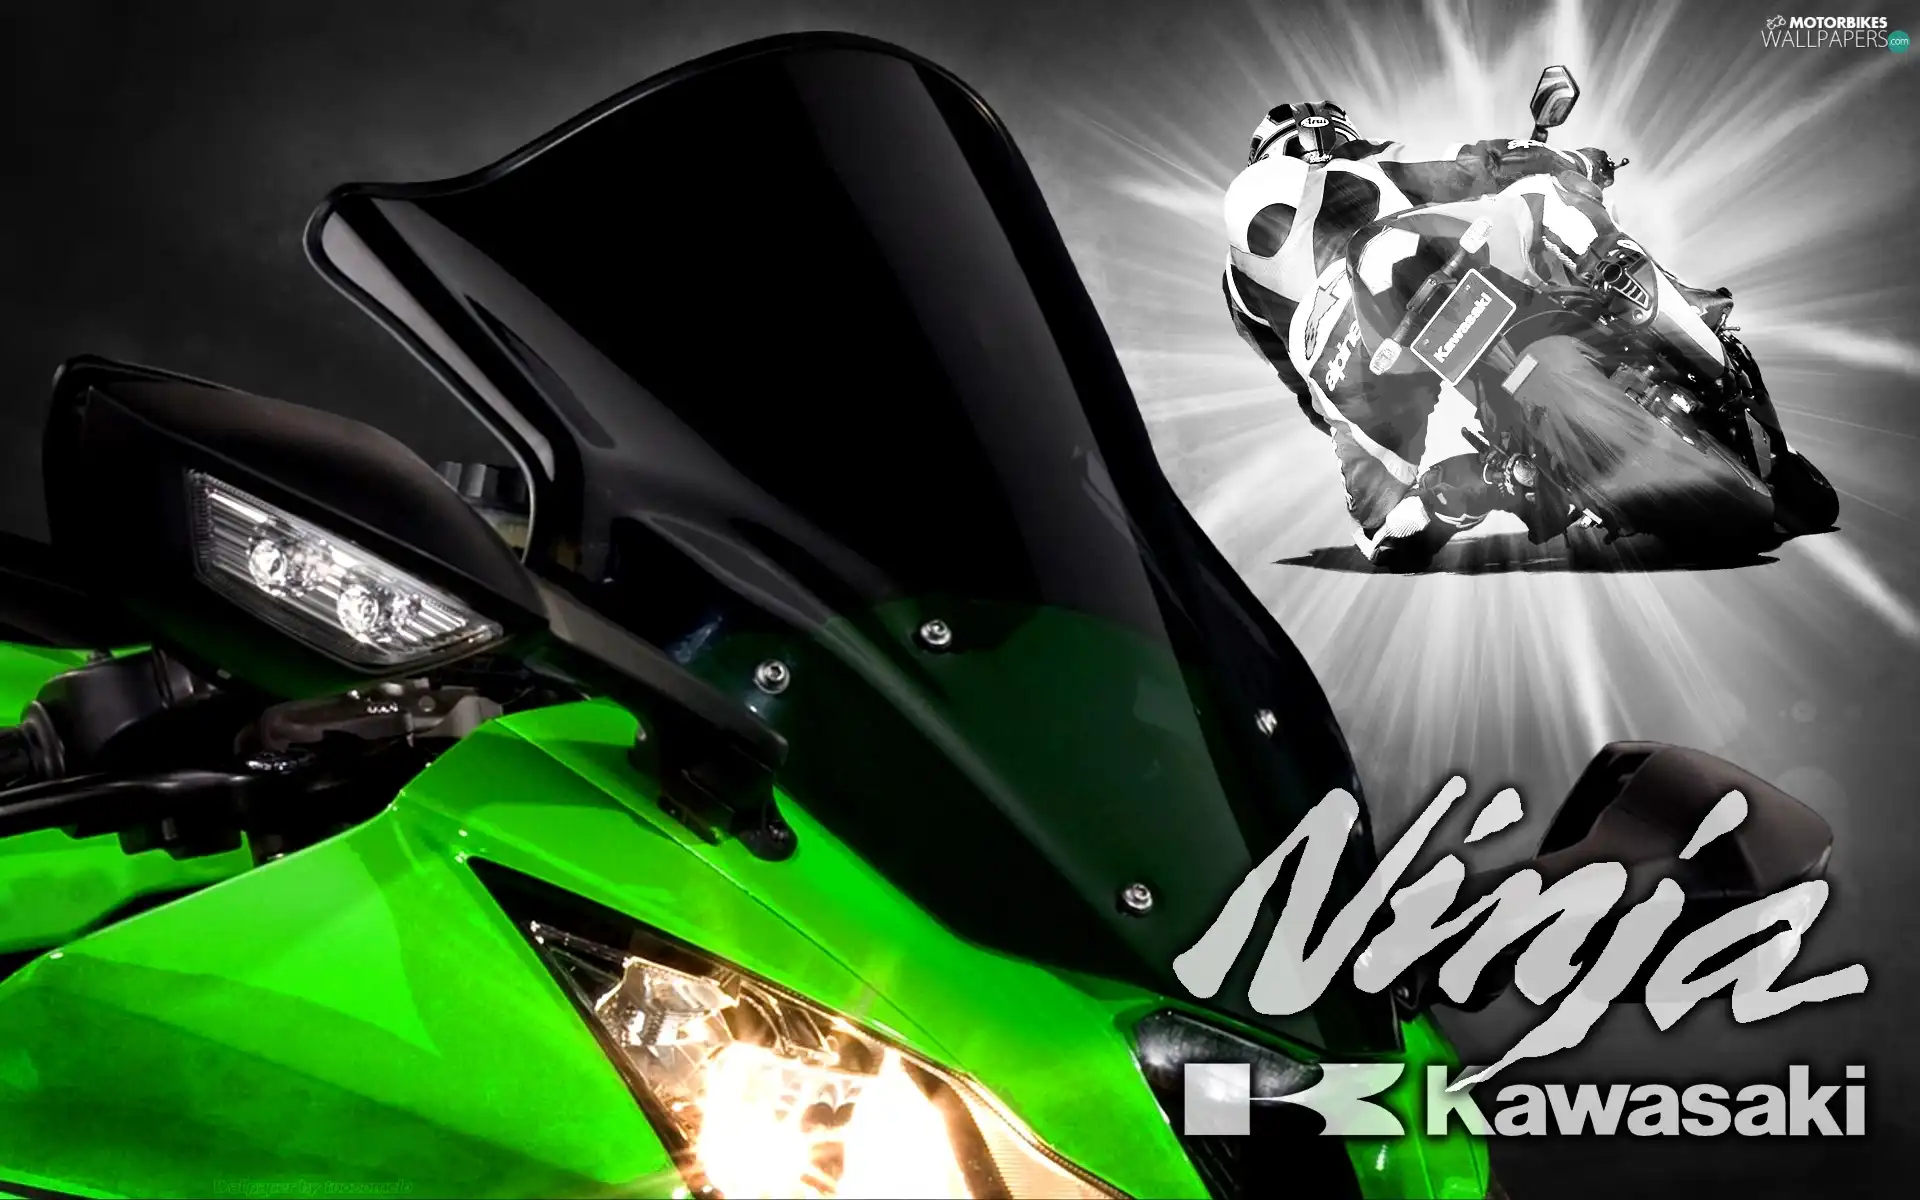 Becks - motorbike, Motorcyclist, motor-bike, Green, Kawasaki ZX-10R Ninja